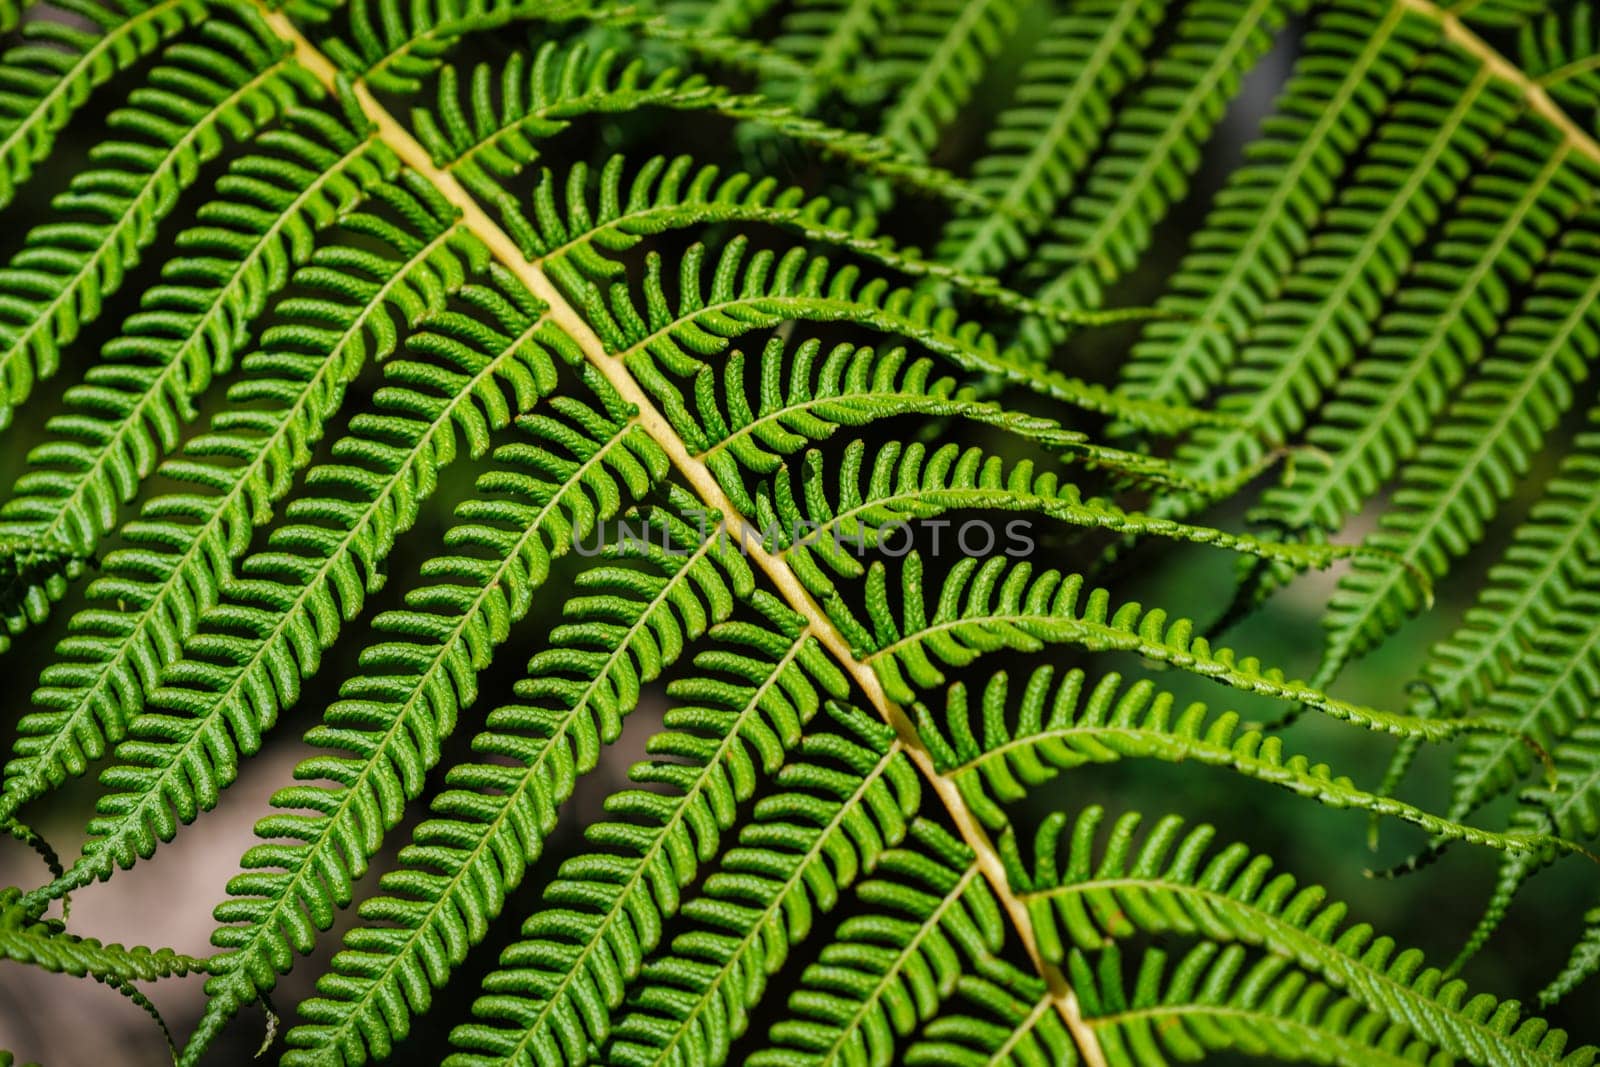 Sphaeropteris cooperi or Cyathea cooperi lacy tree fern, scaly tree fern by dimol